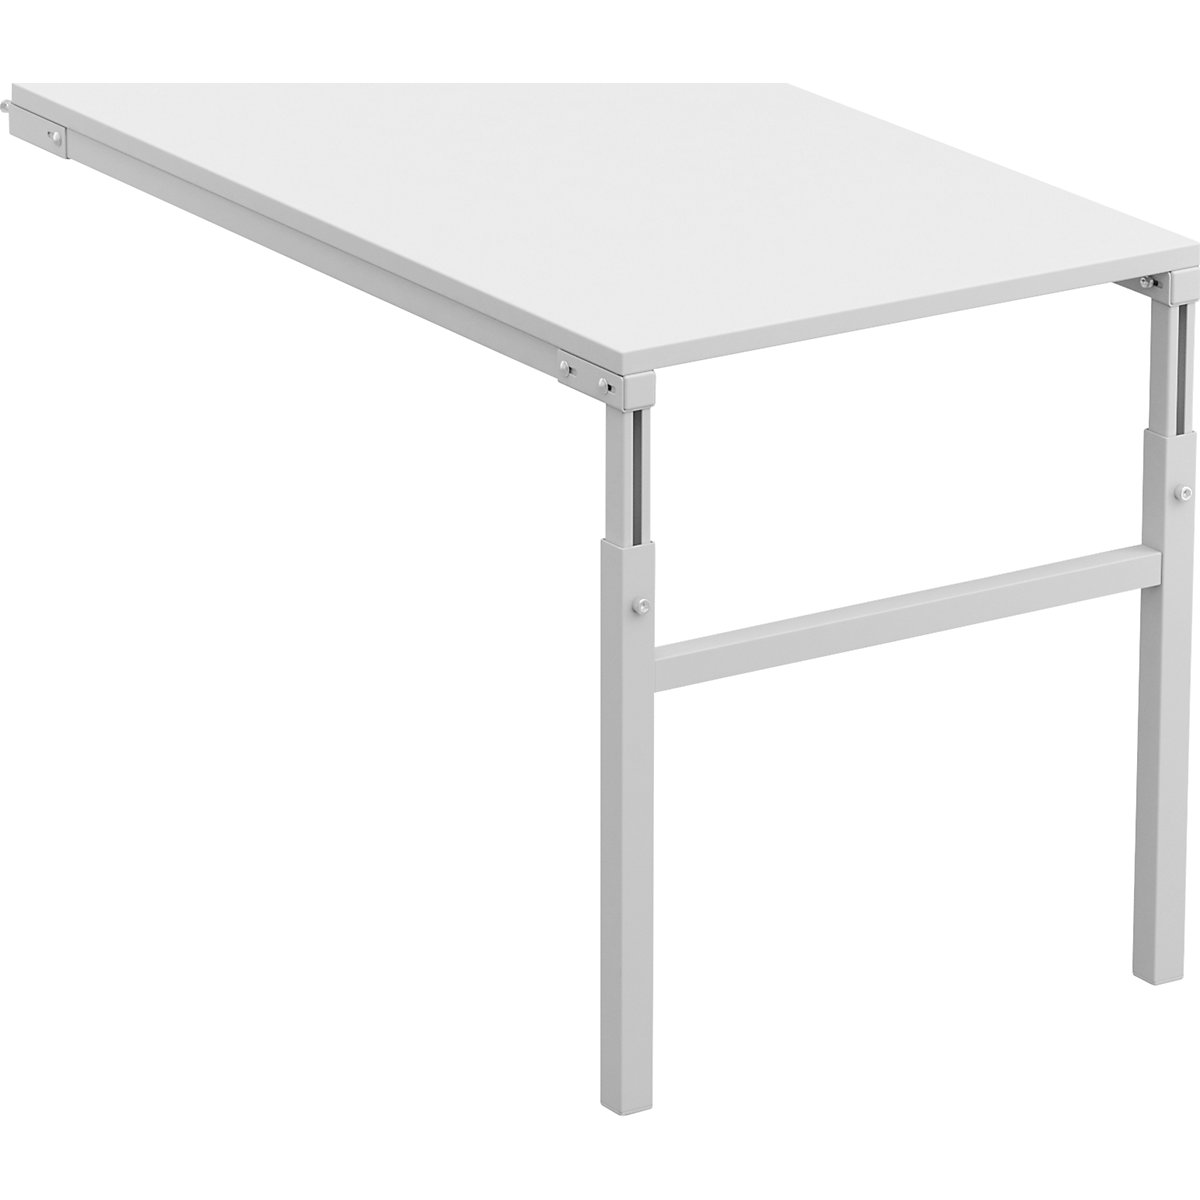 Corner combination add-on table – Treston